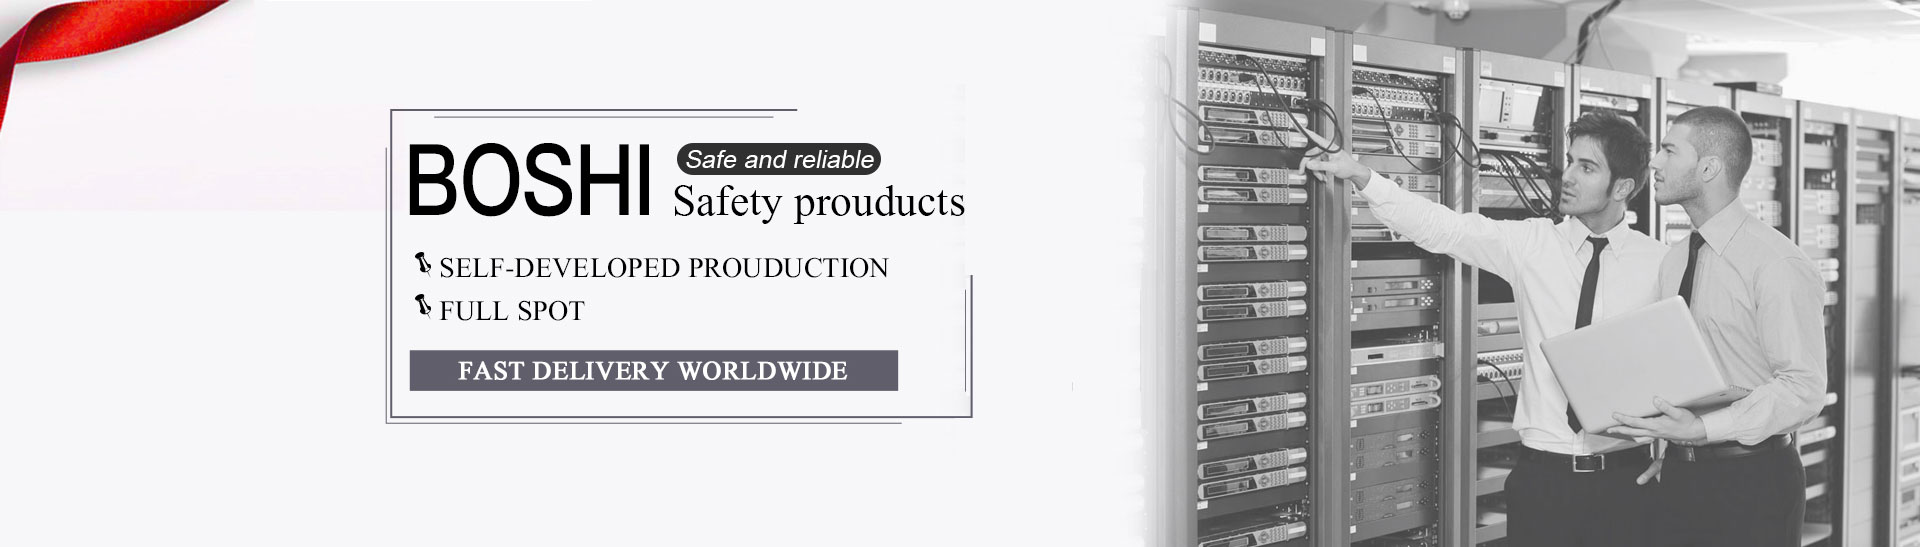 BOSHI Safety products